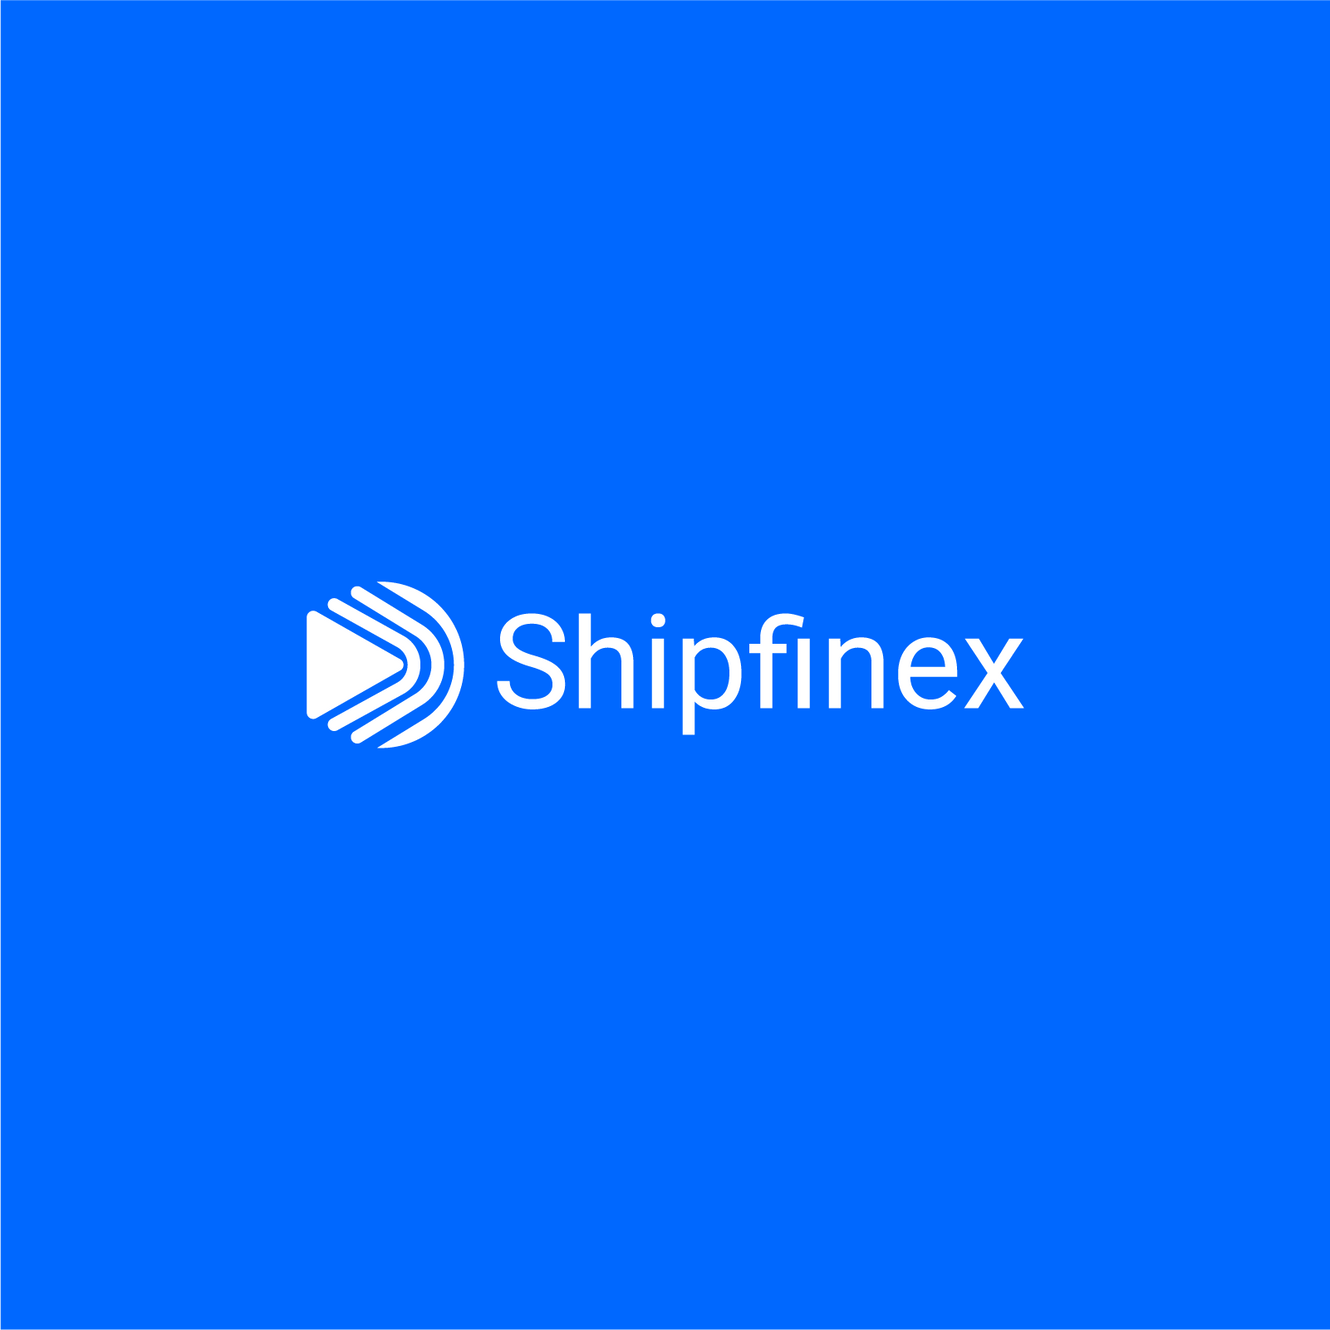 ShipFinex - Your Gateway to Ship Ownership